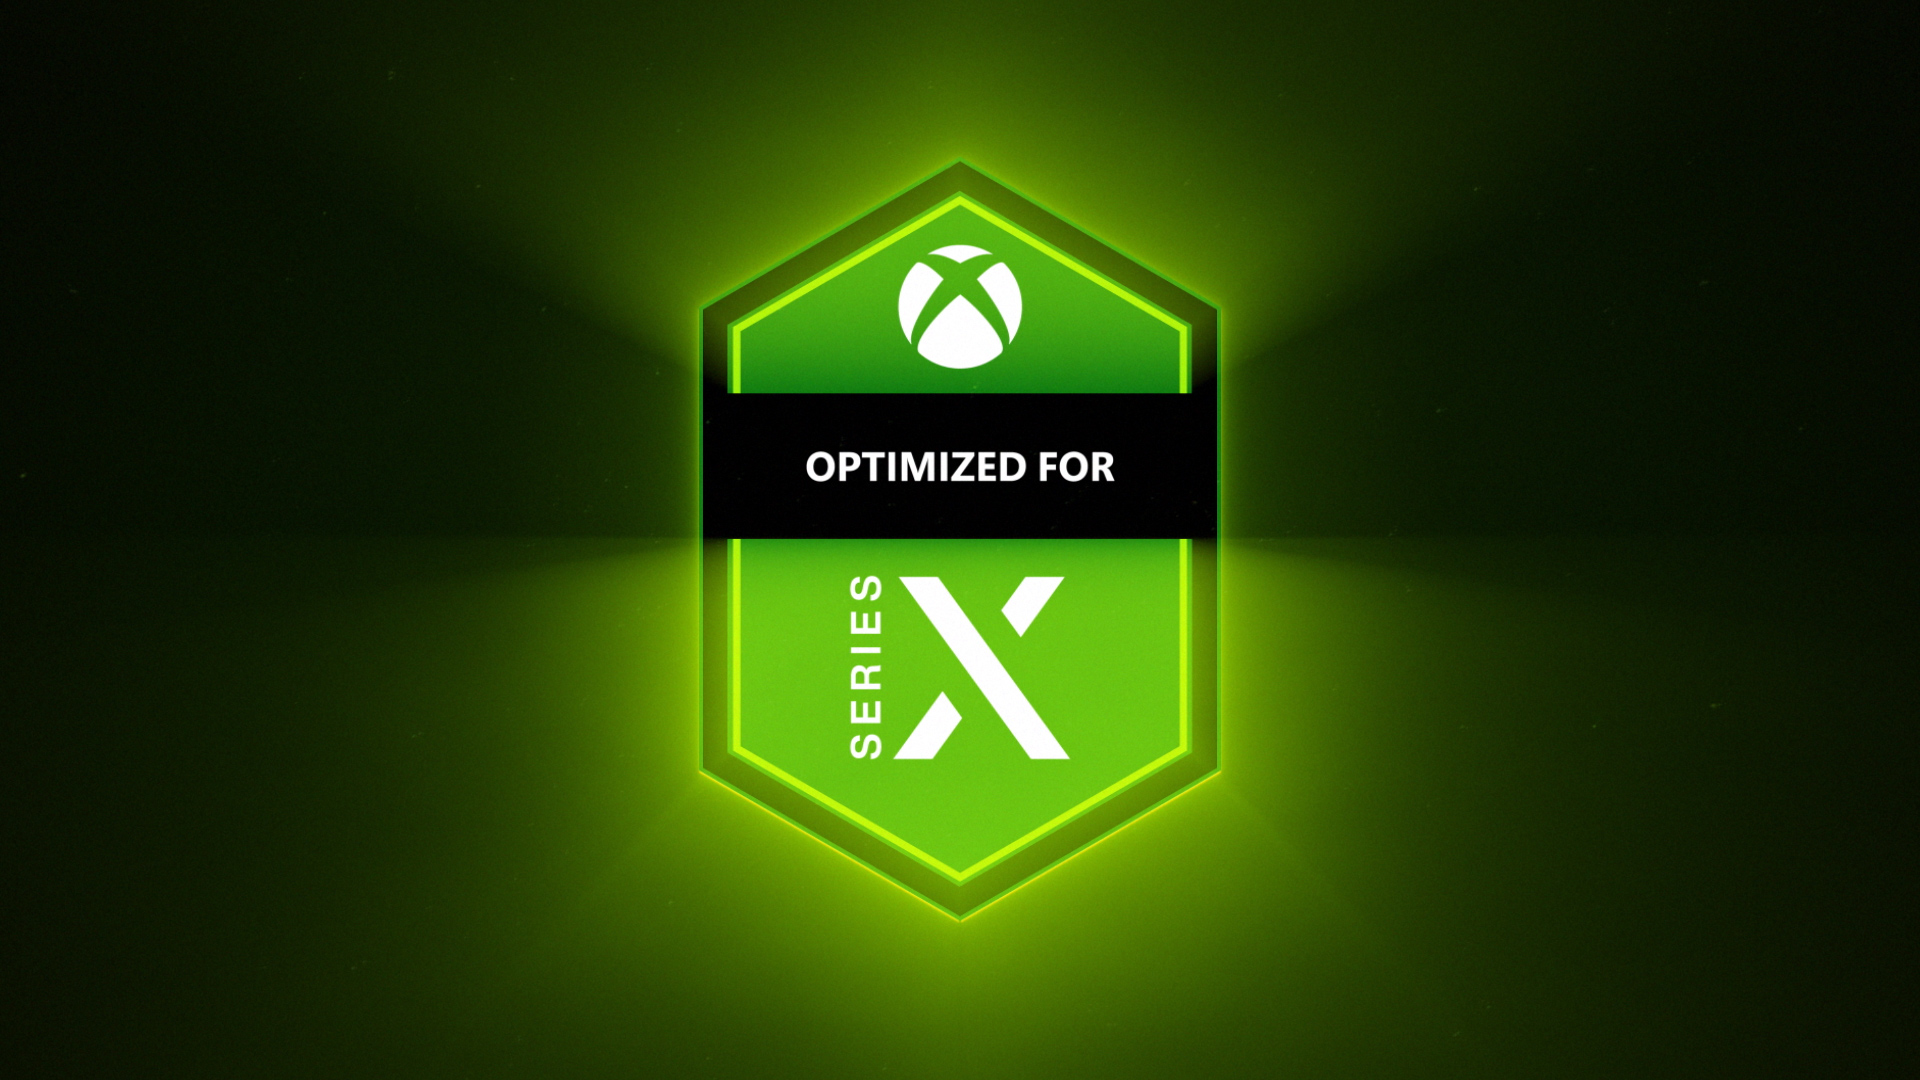 Windows' DirectX 12 Ultimate will help Xbox Series X, PC games